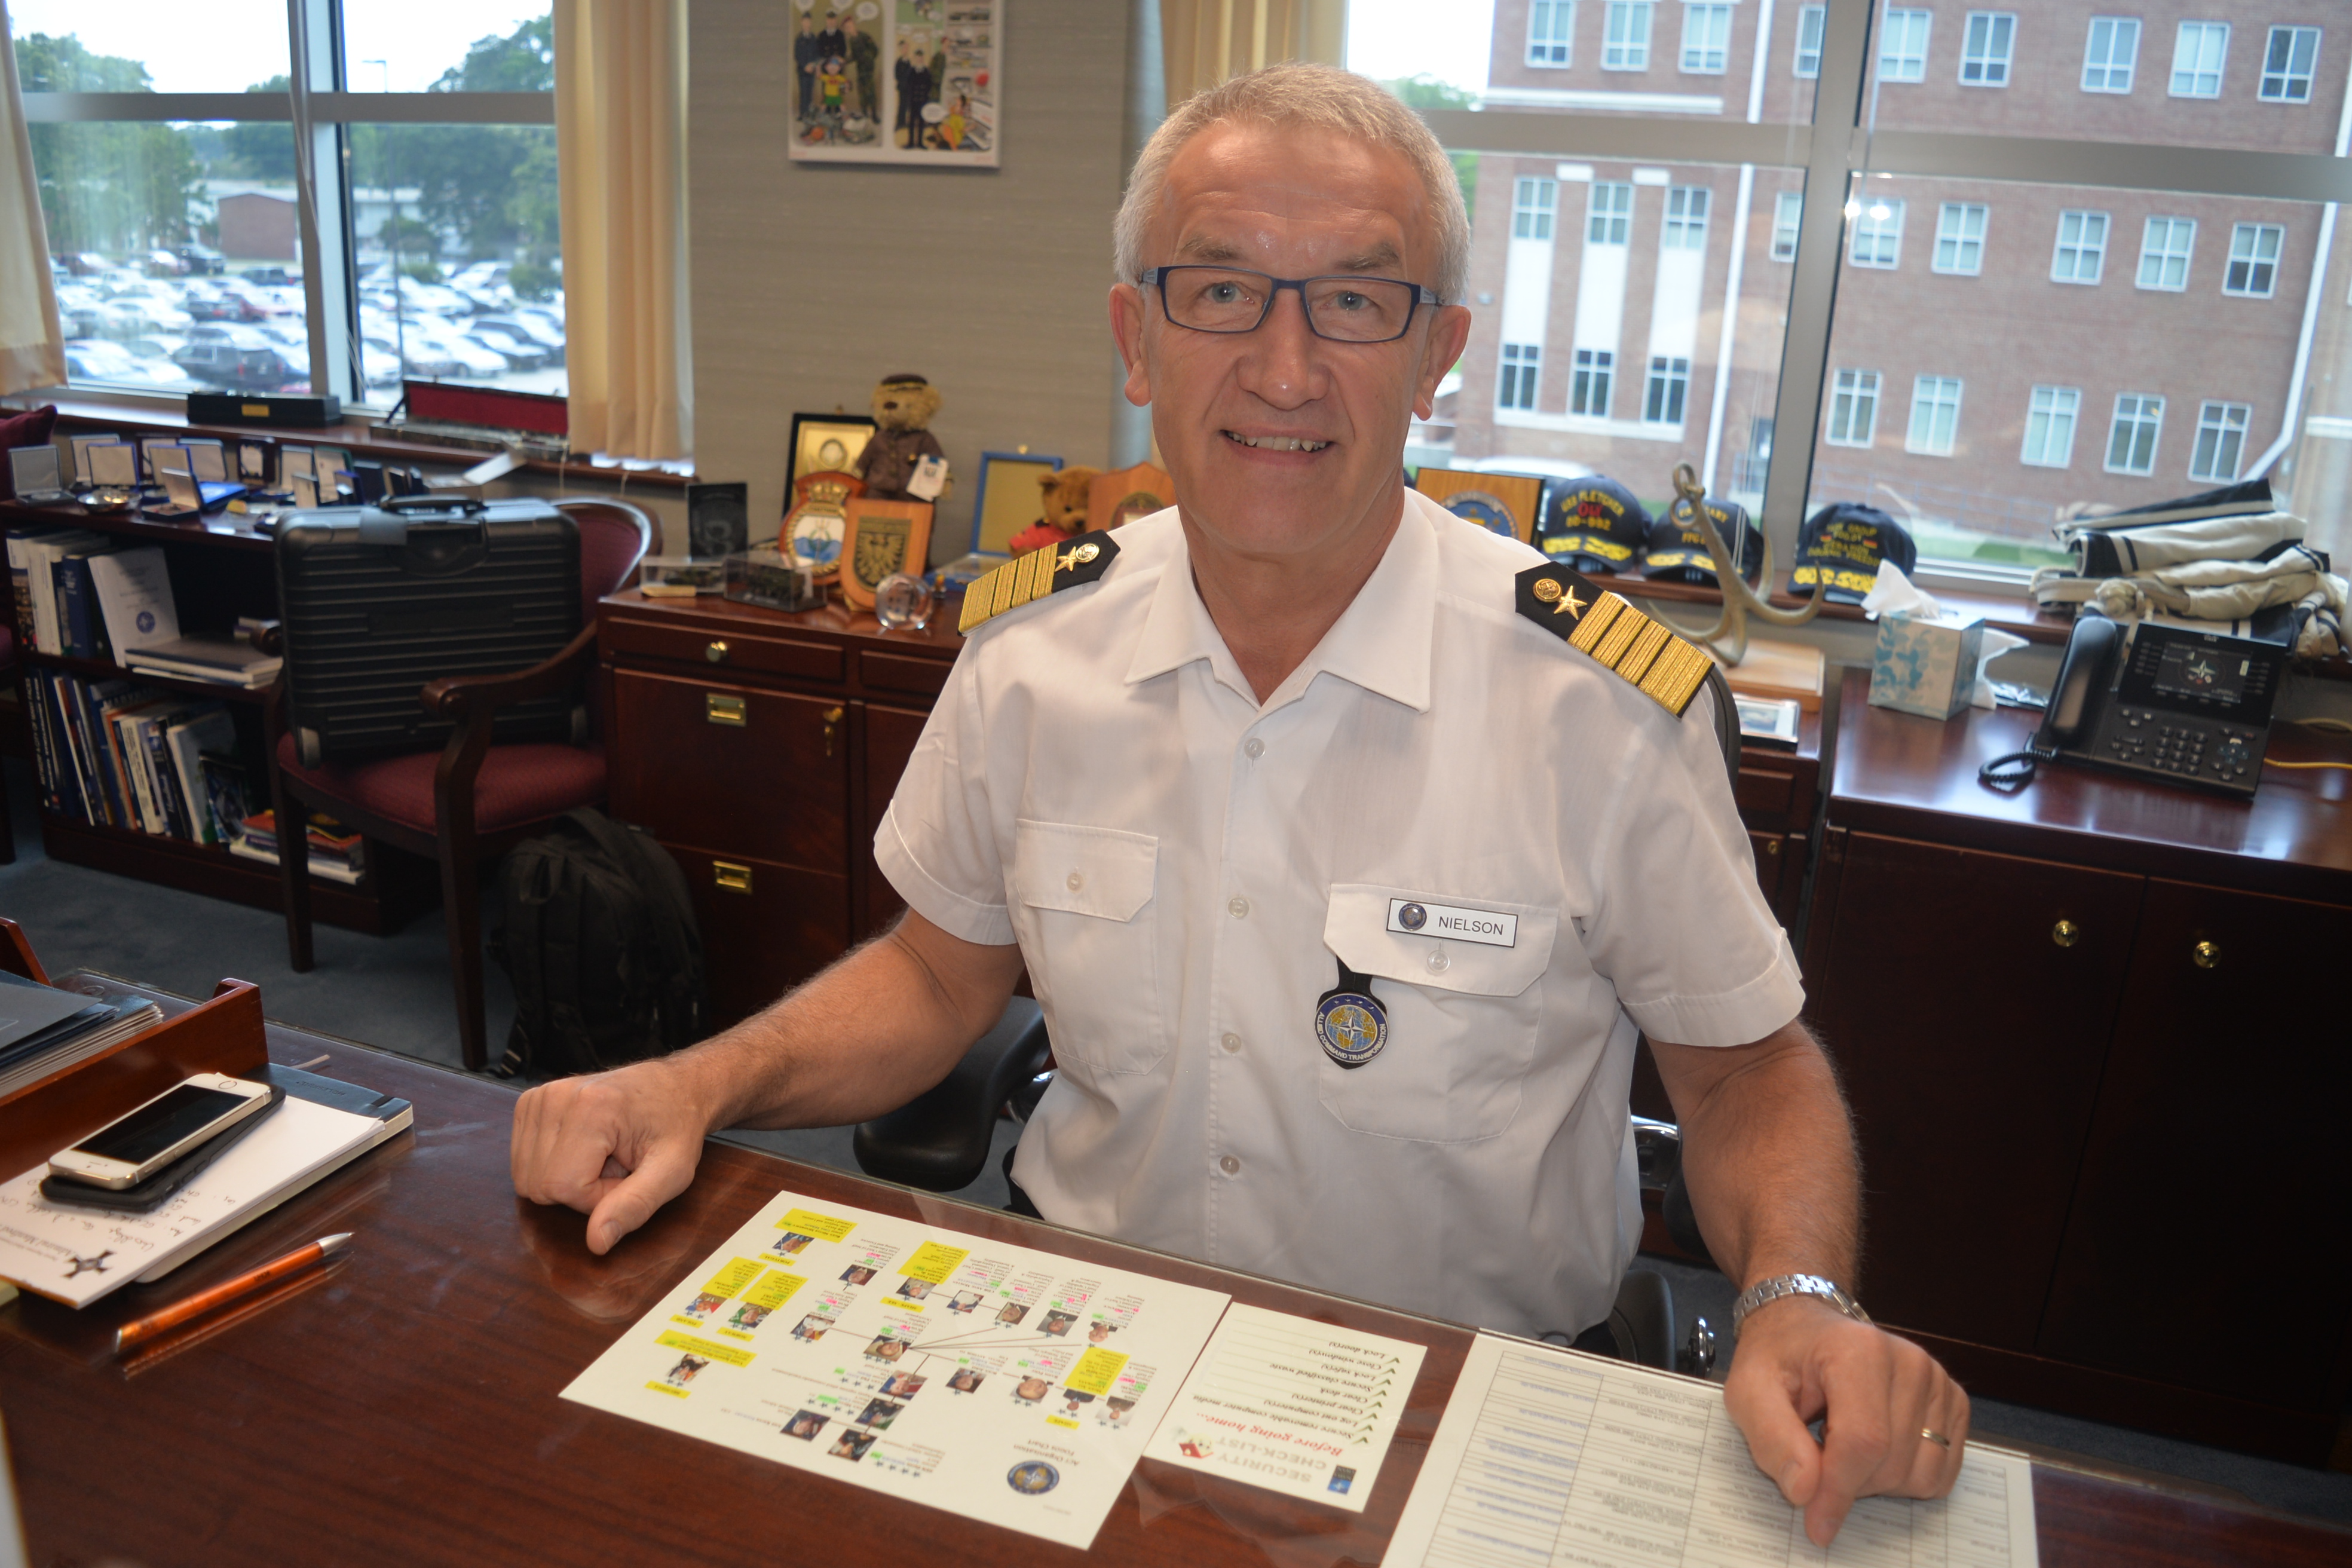 NATO in NORFOLK: Meet Admiral Manfred Nielson